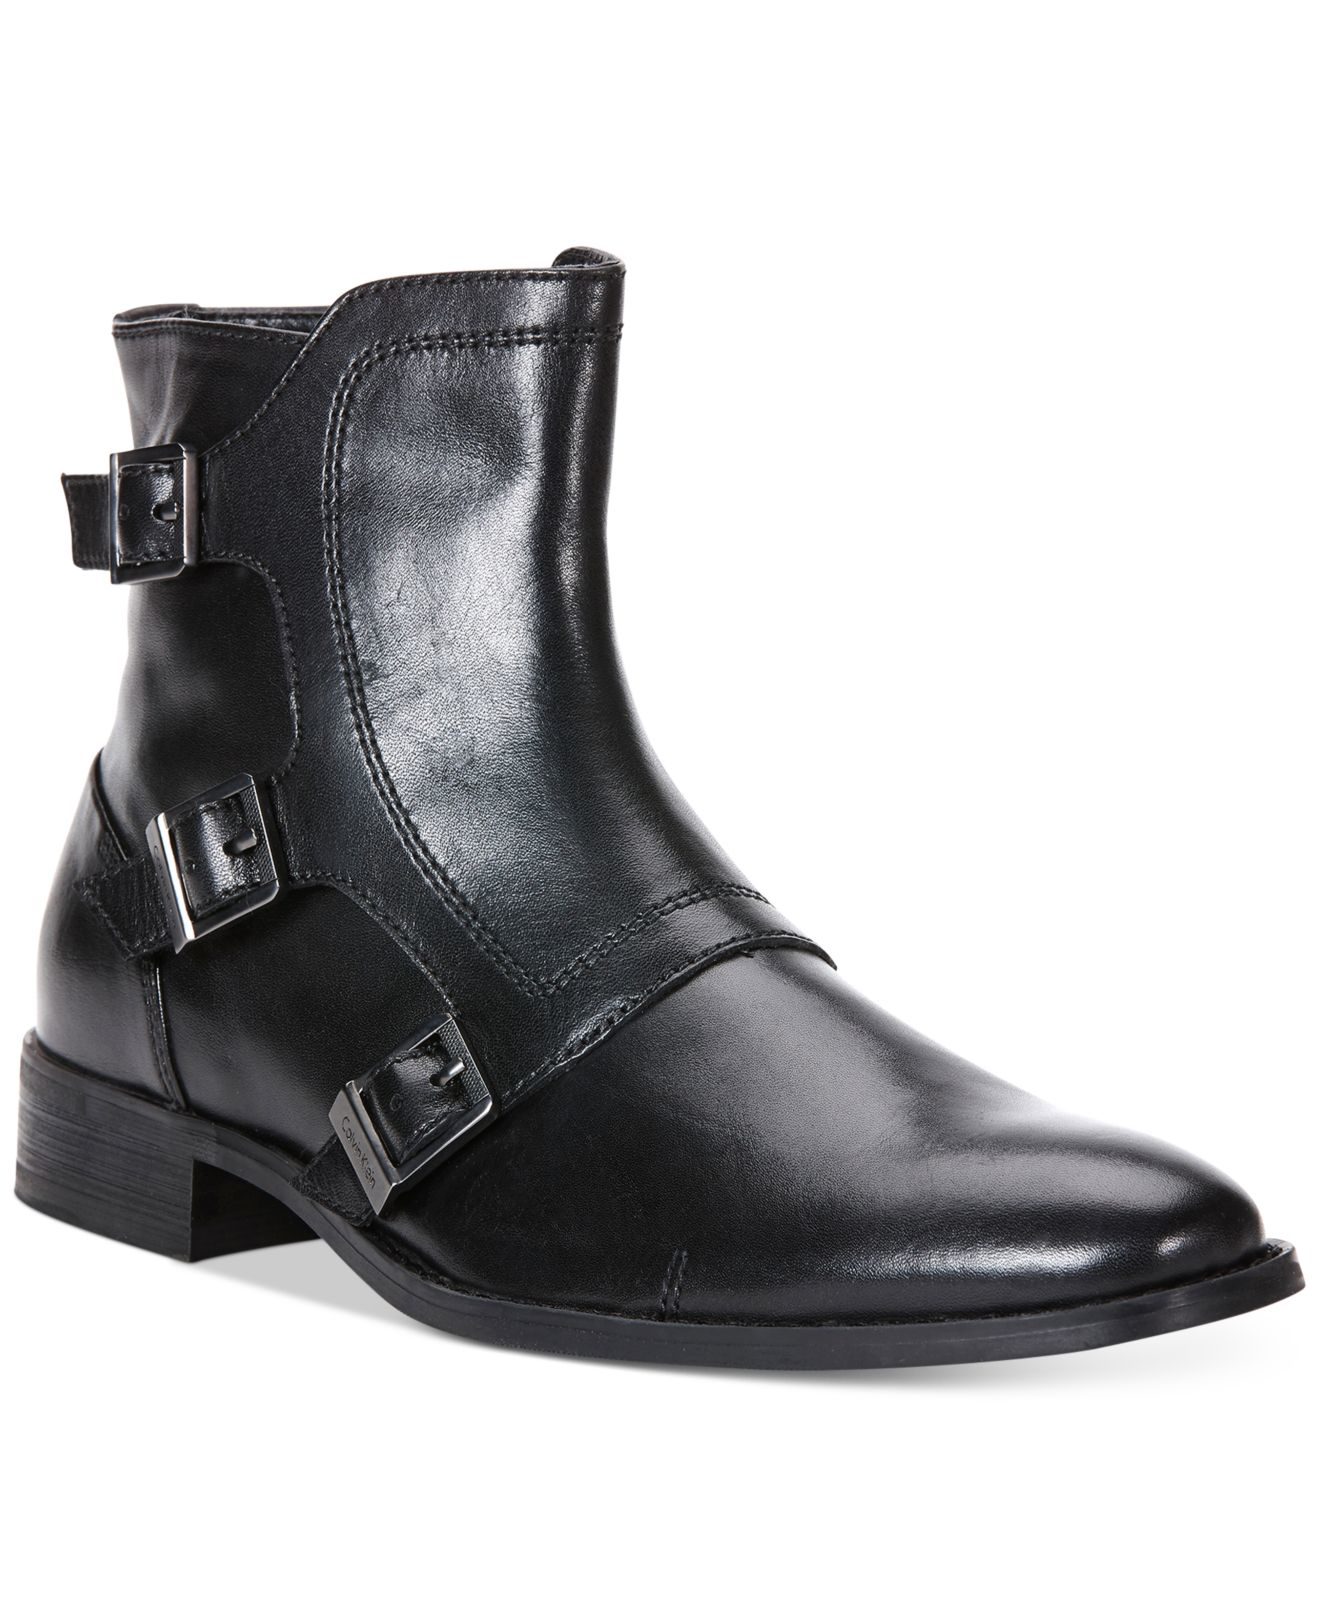 Calvin Klein Stark Leather Boots in Black - Lyst